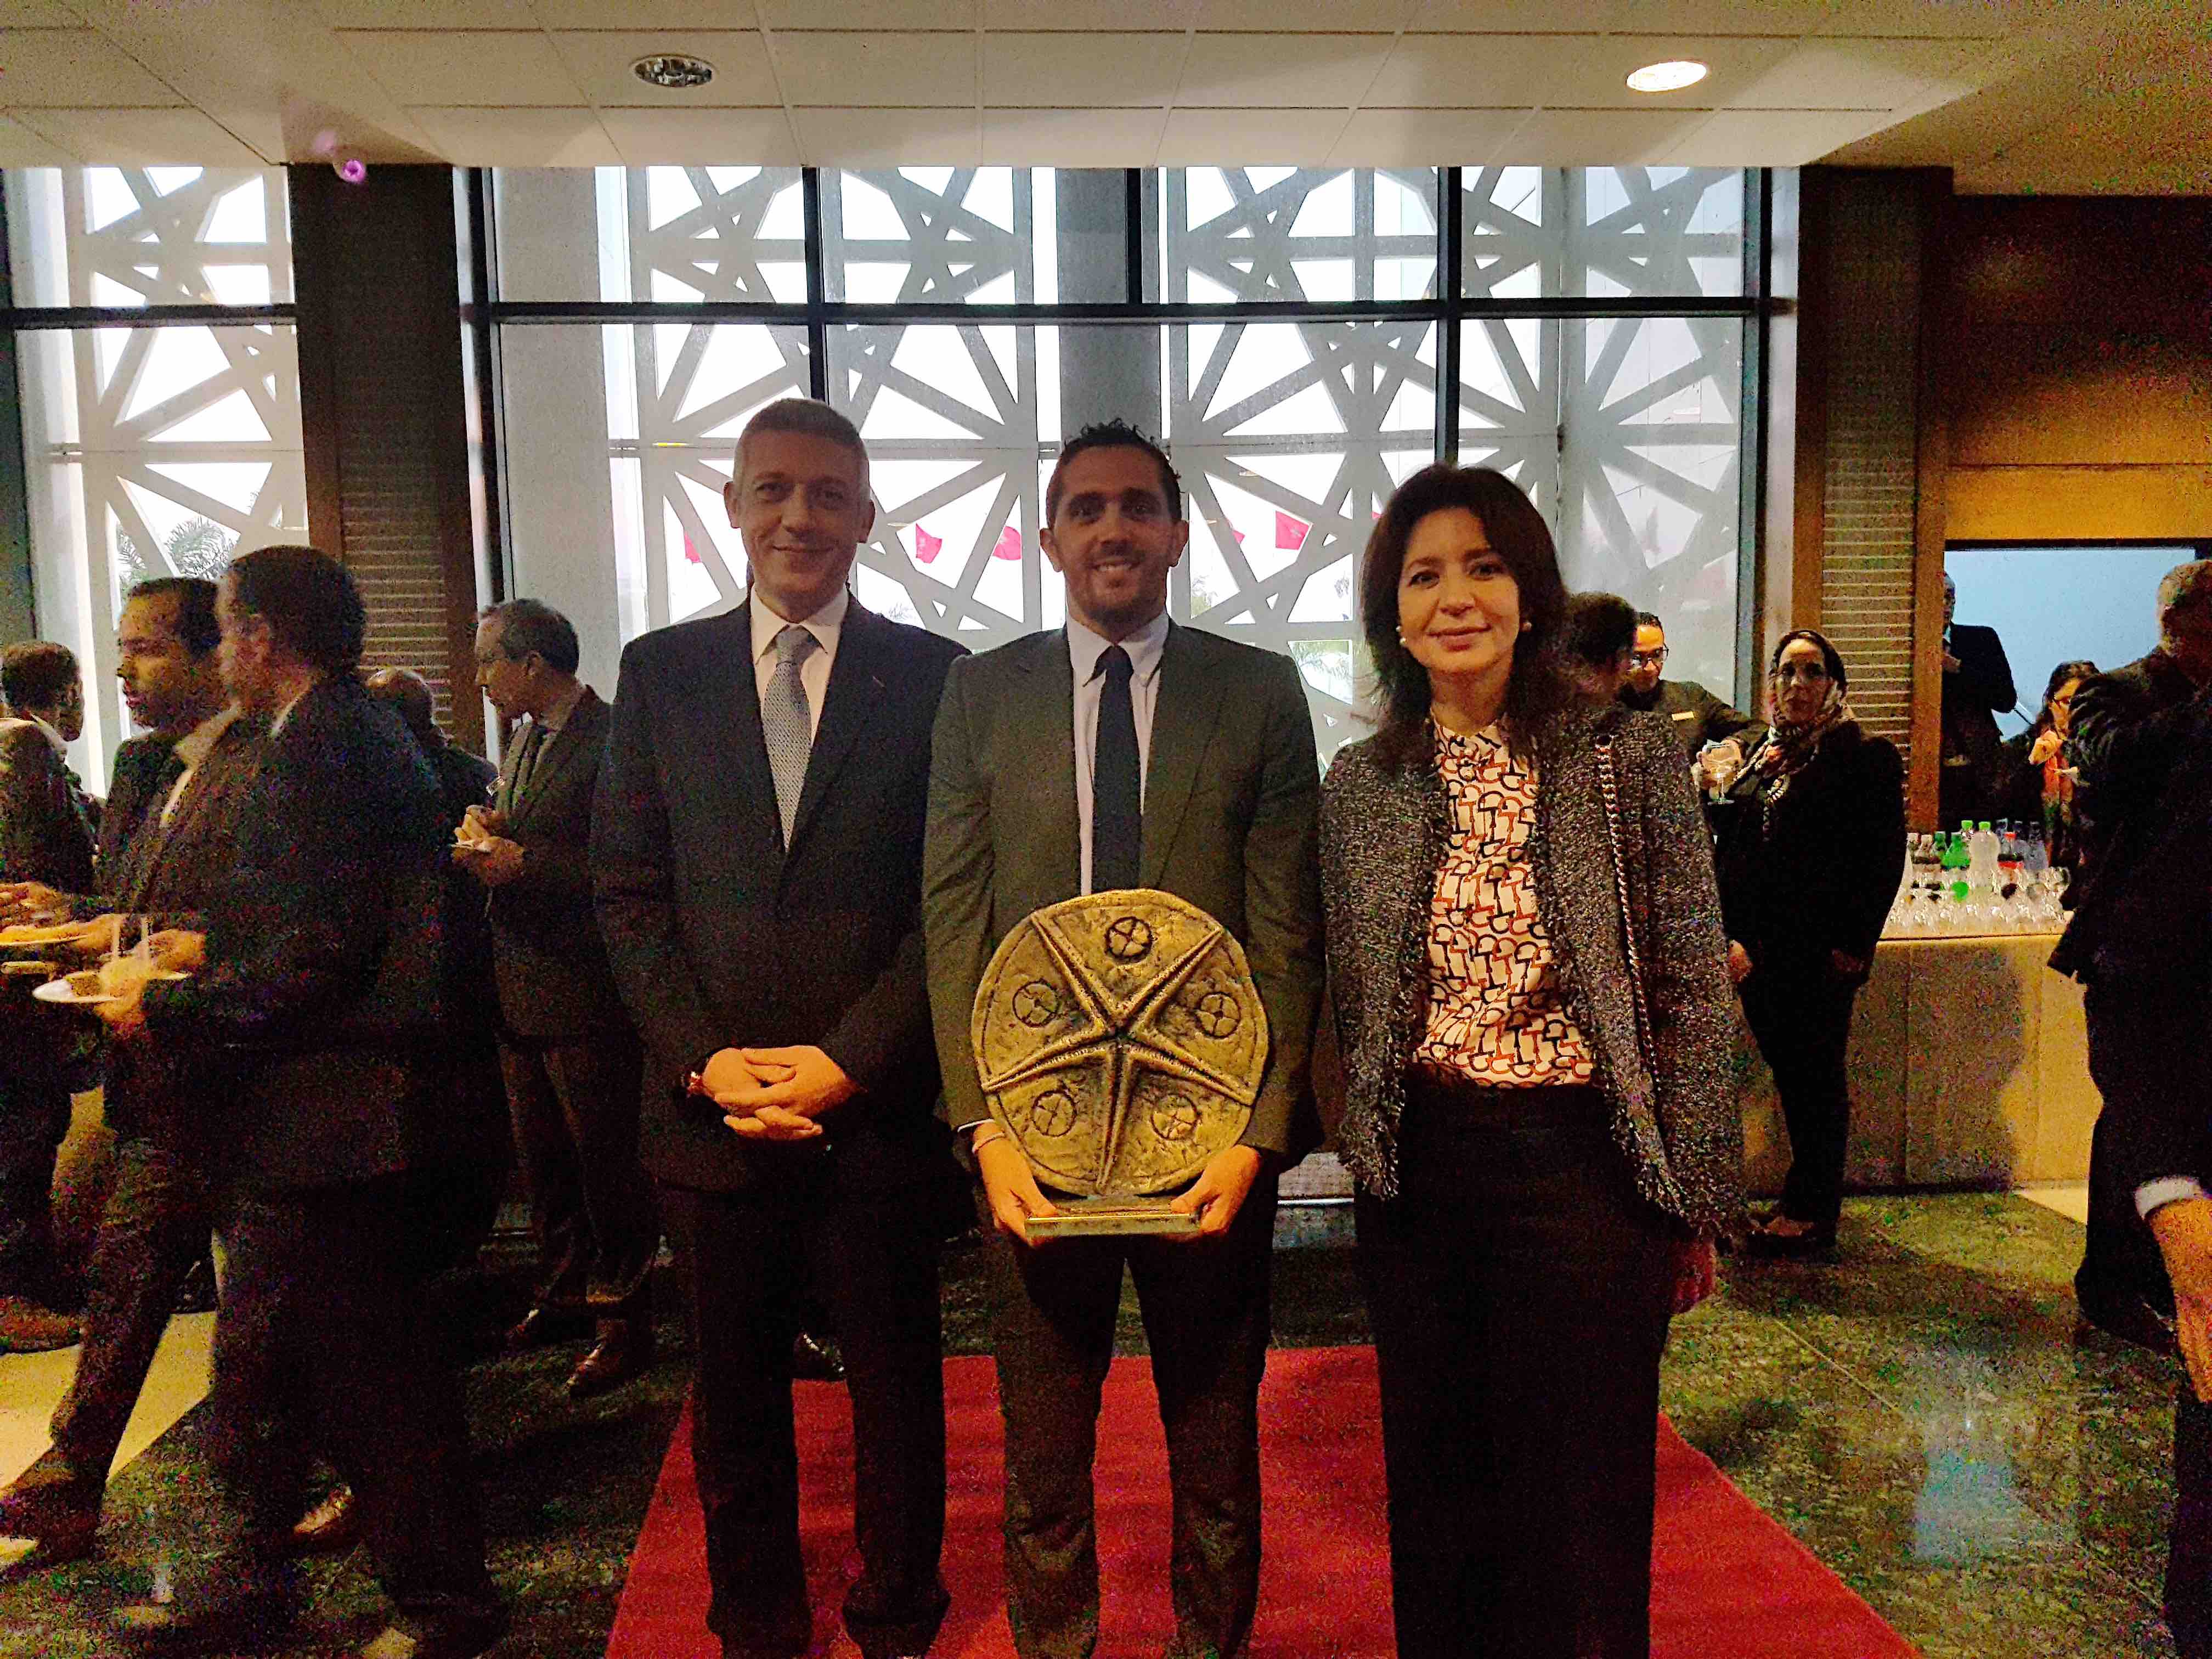 Atlanta décroche le Trophée Lalla Hasnaa "Littoral durable" 